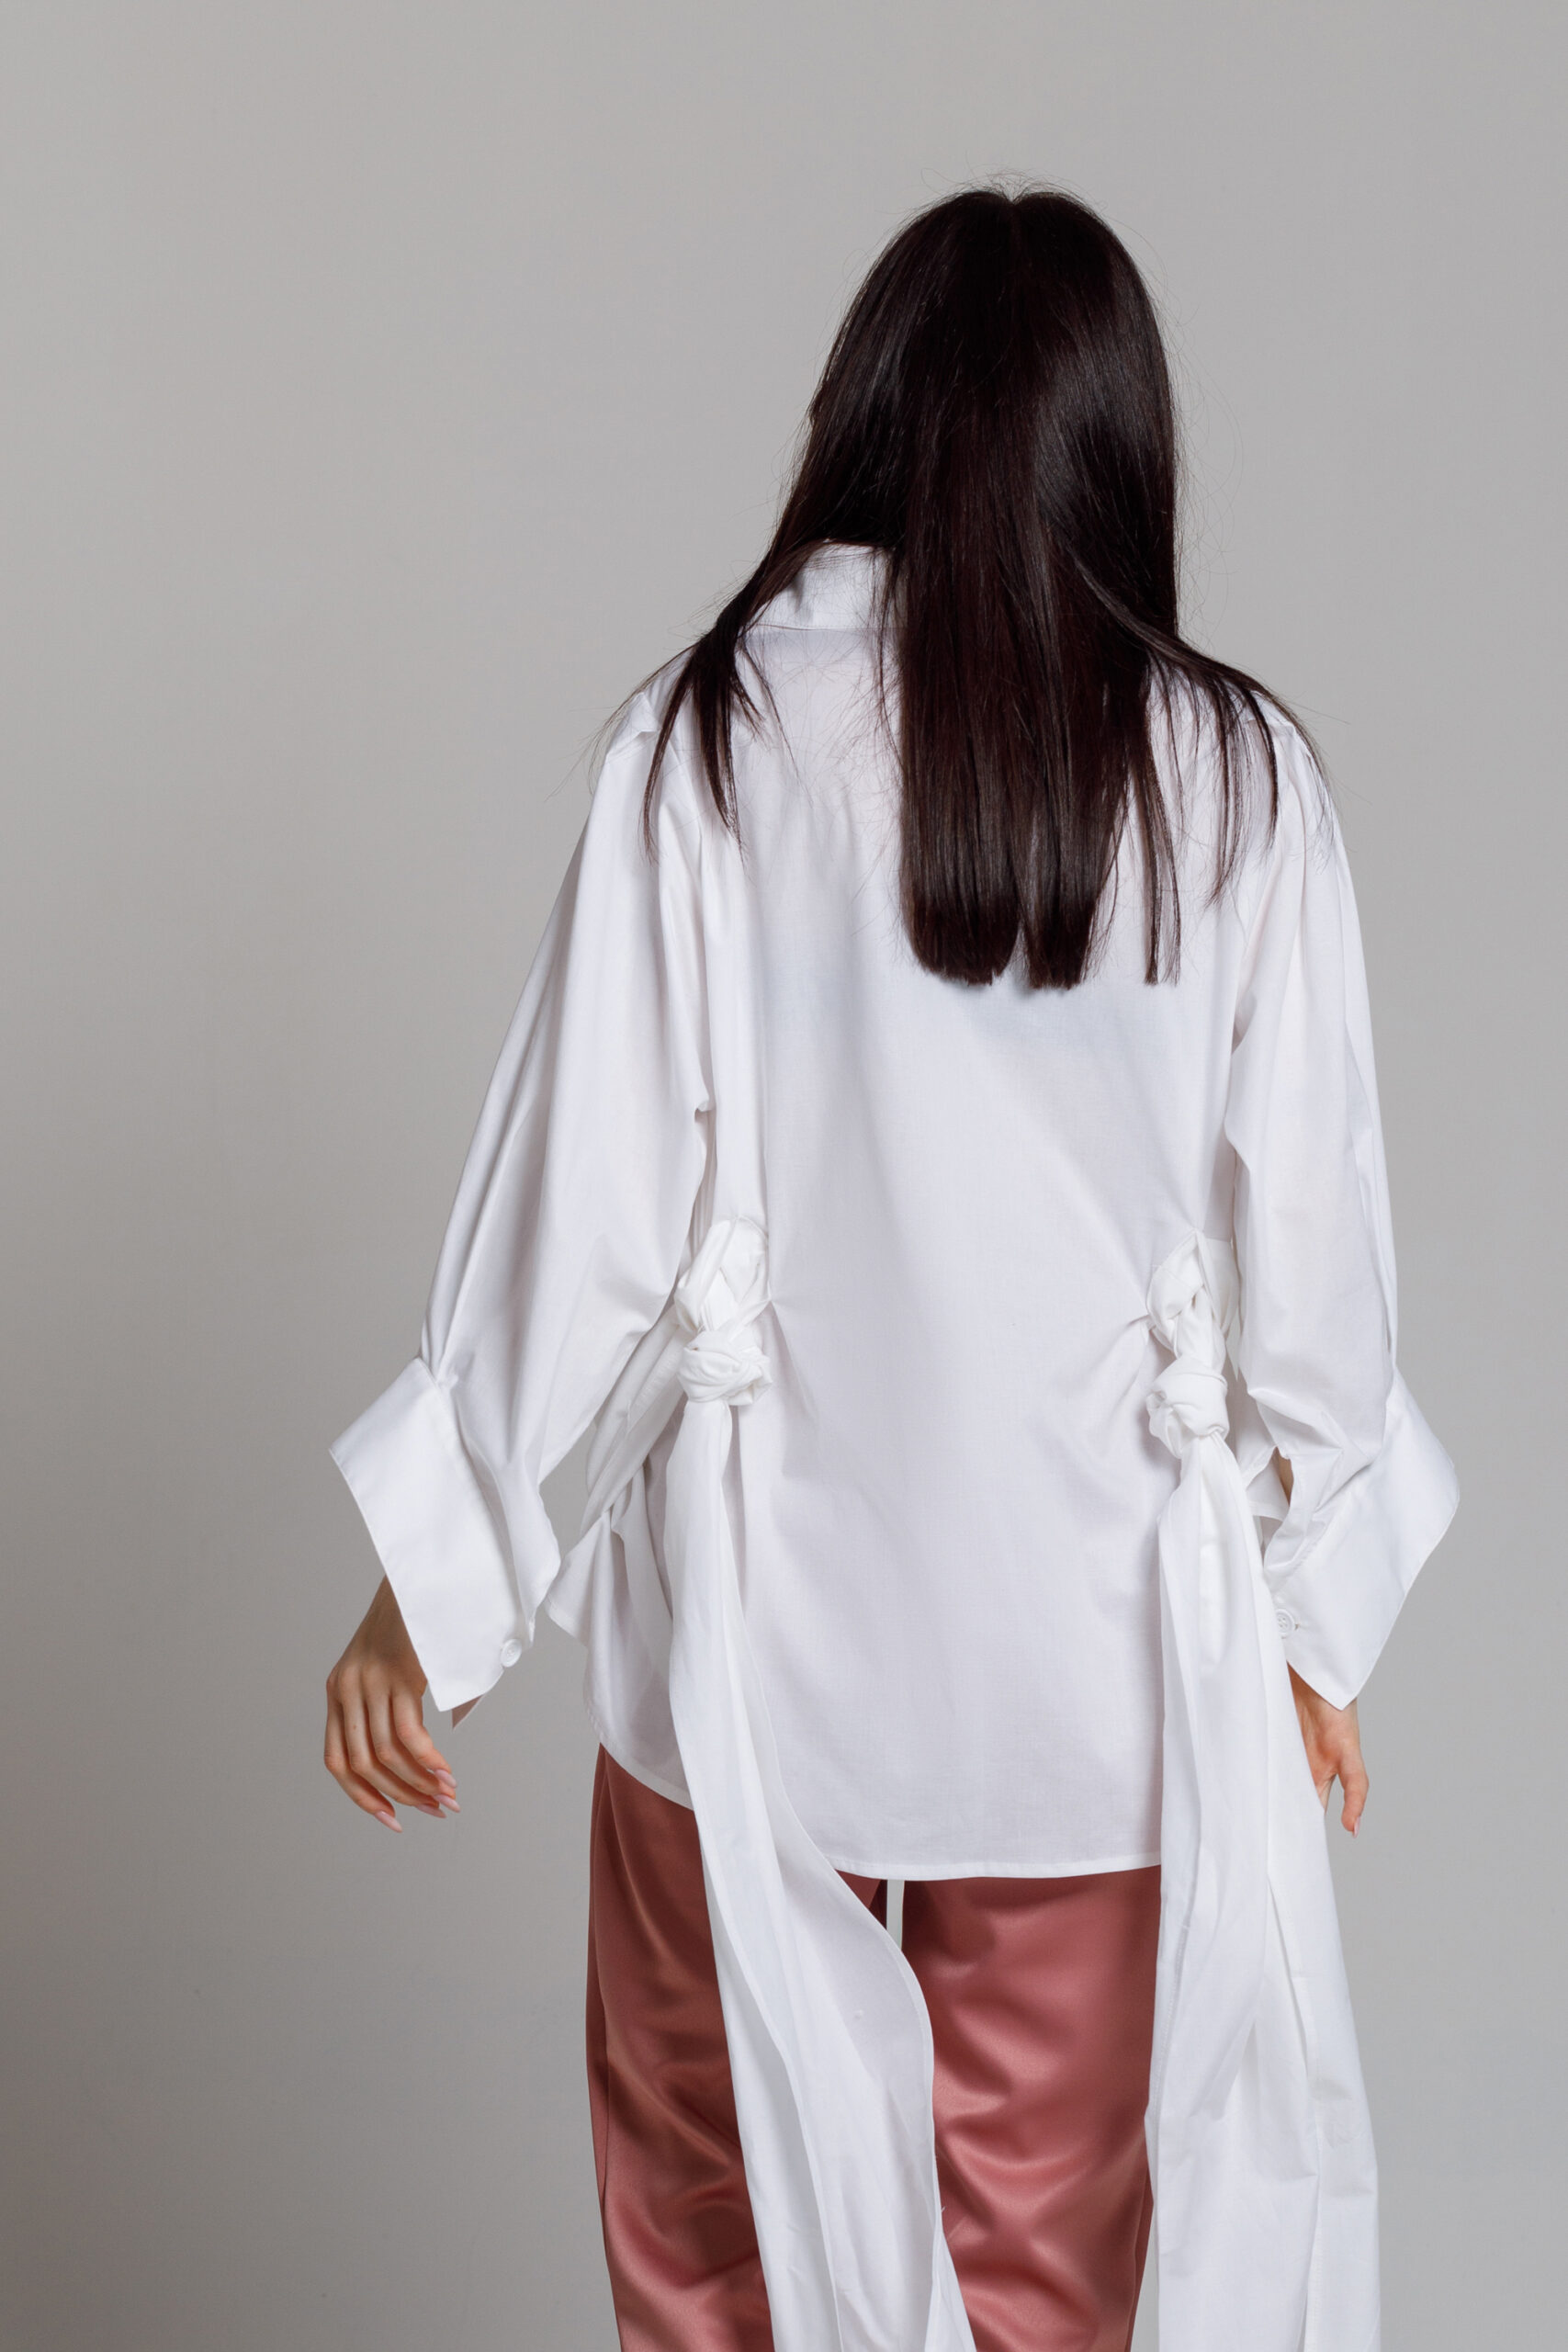 BIANCO shirt with oversized sleeves. Natural fabrics, original design, handmade embroidery